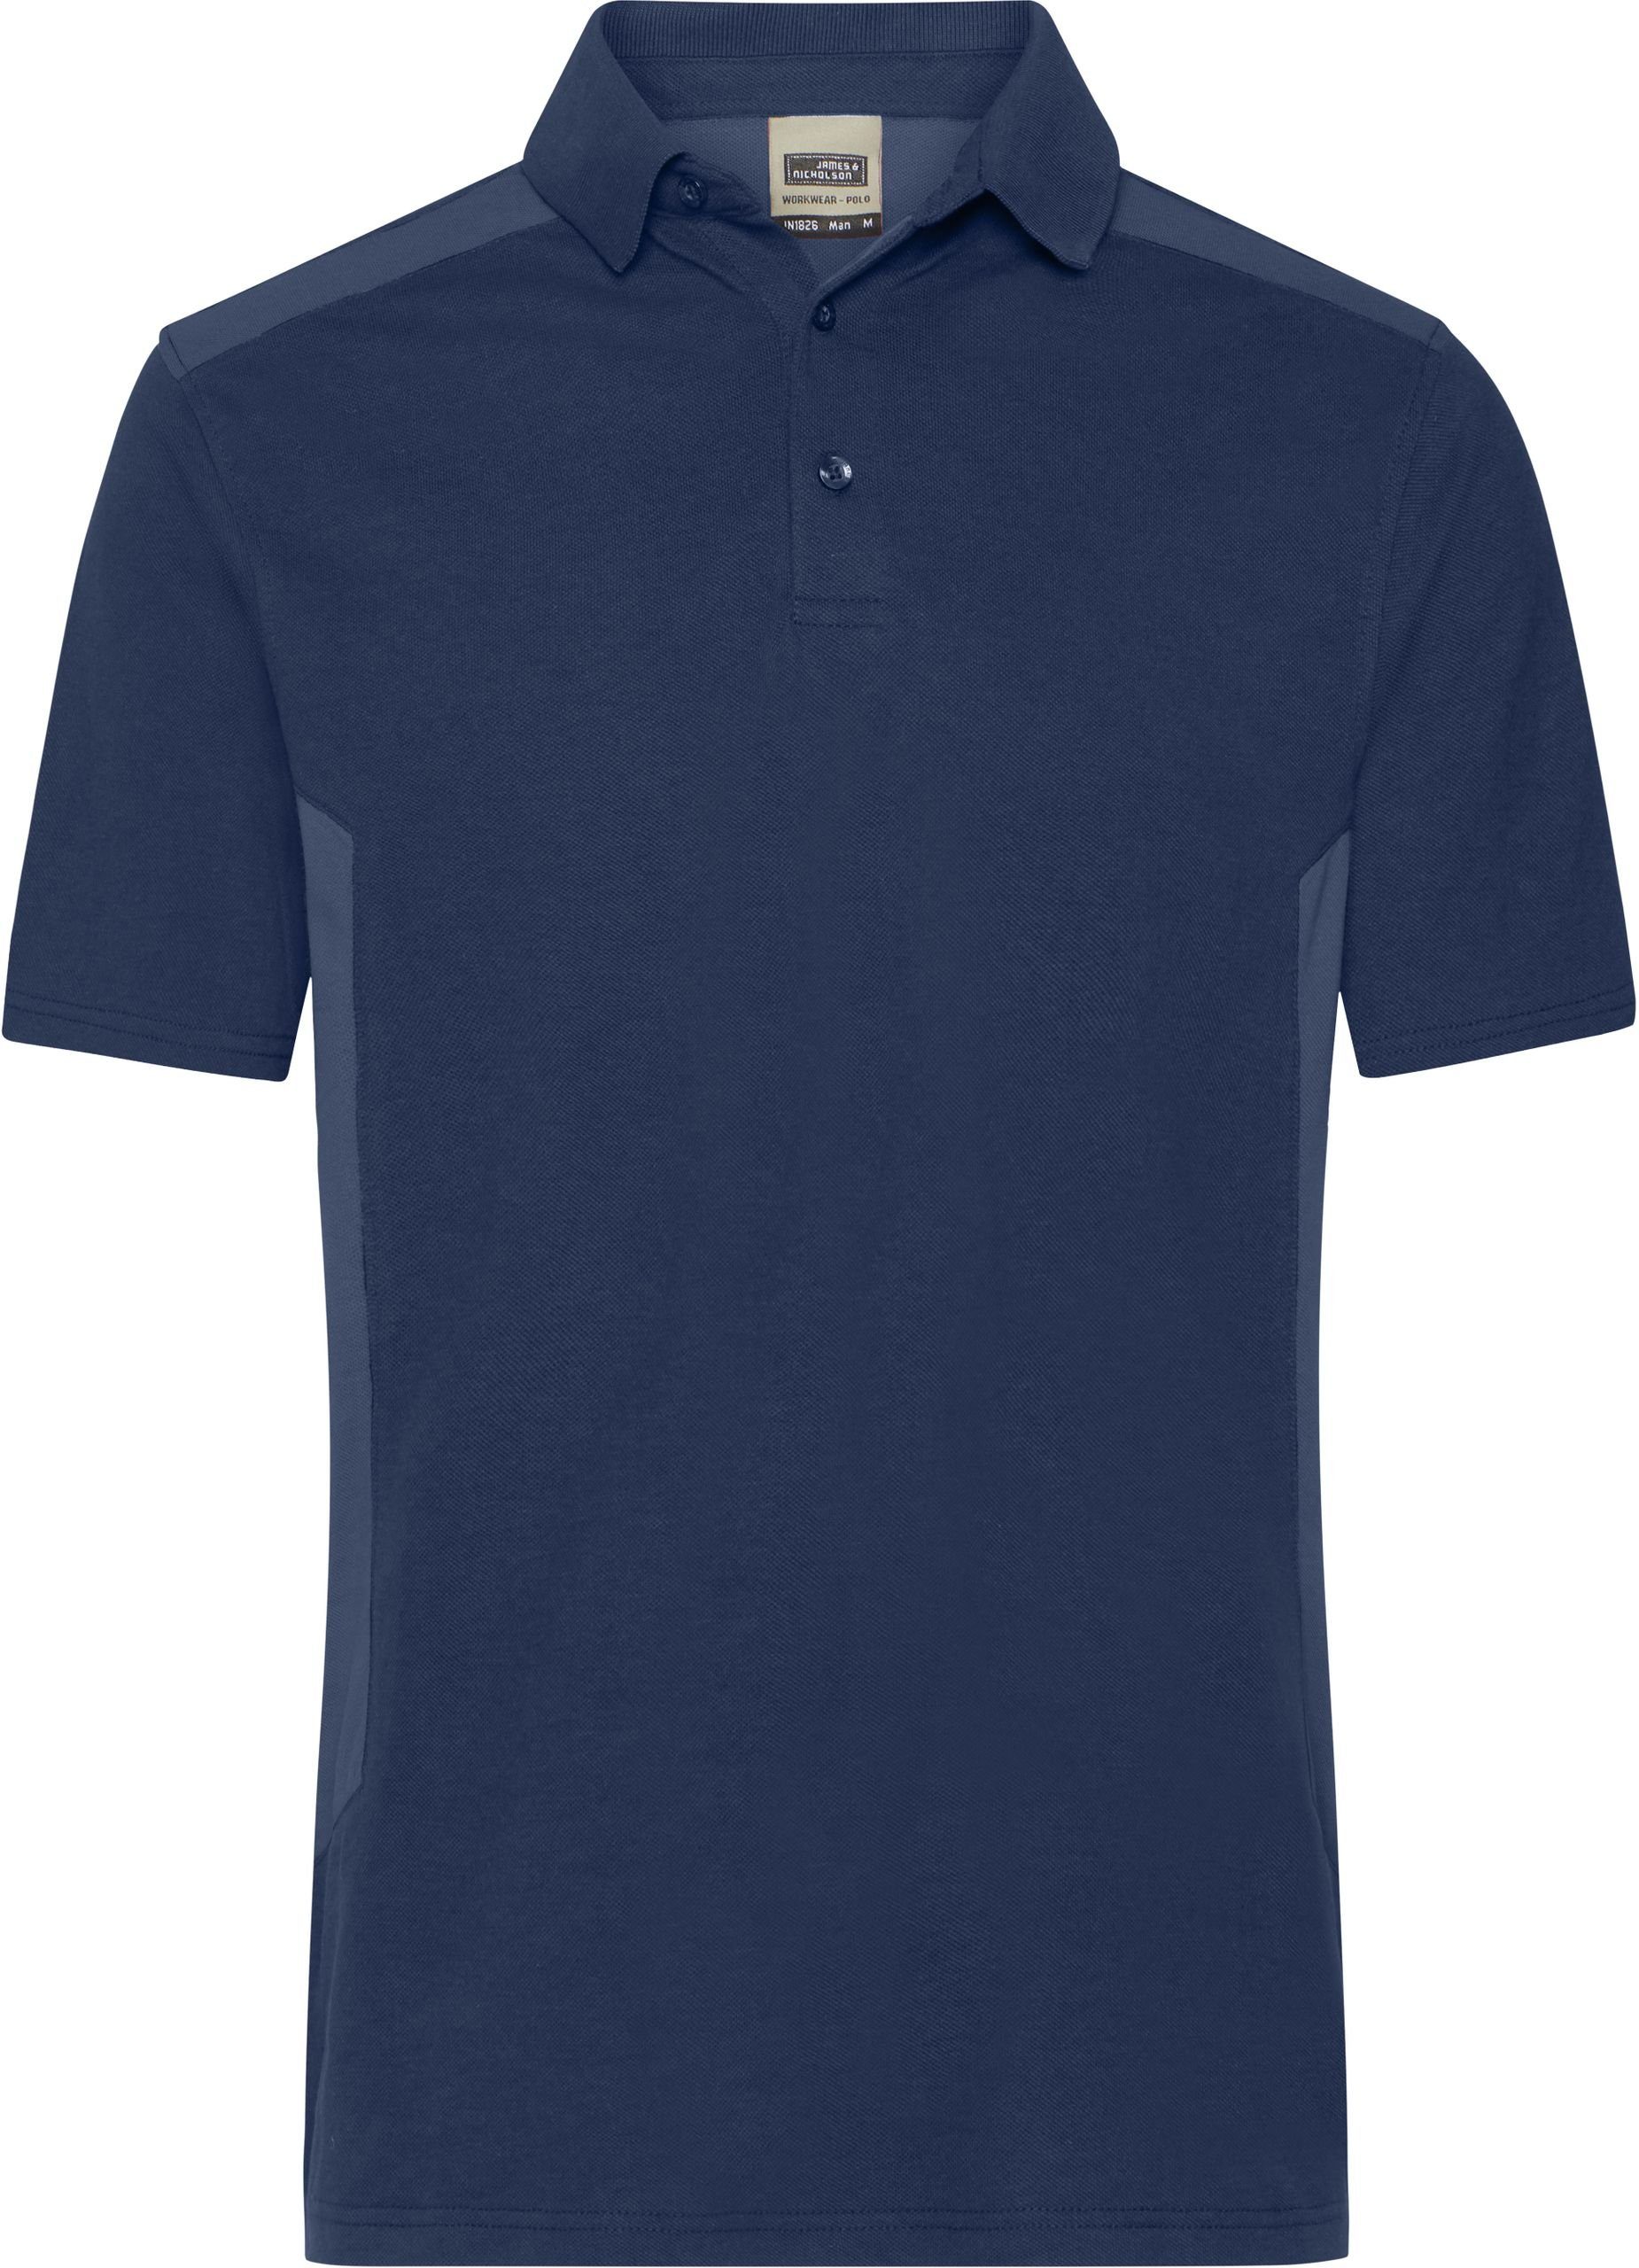 James & Nicholson Poloshirt Workwear - Herren Strong navy/navy Polo